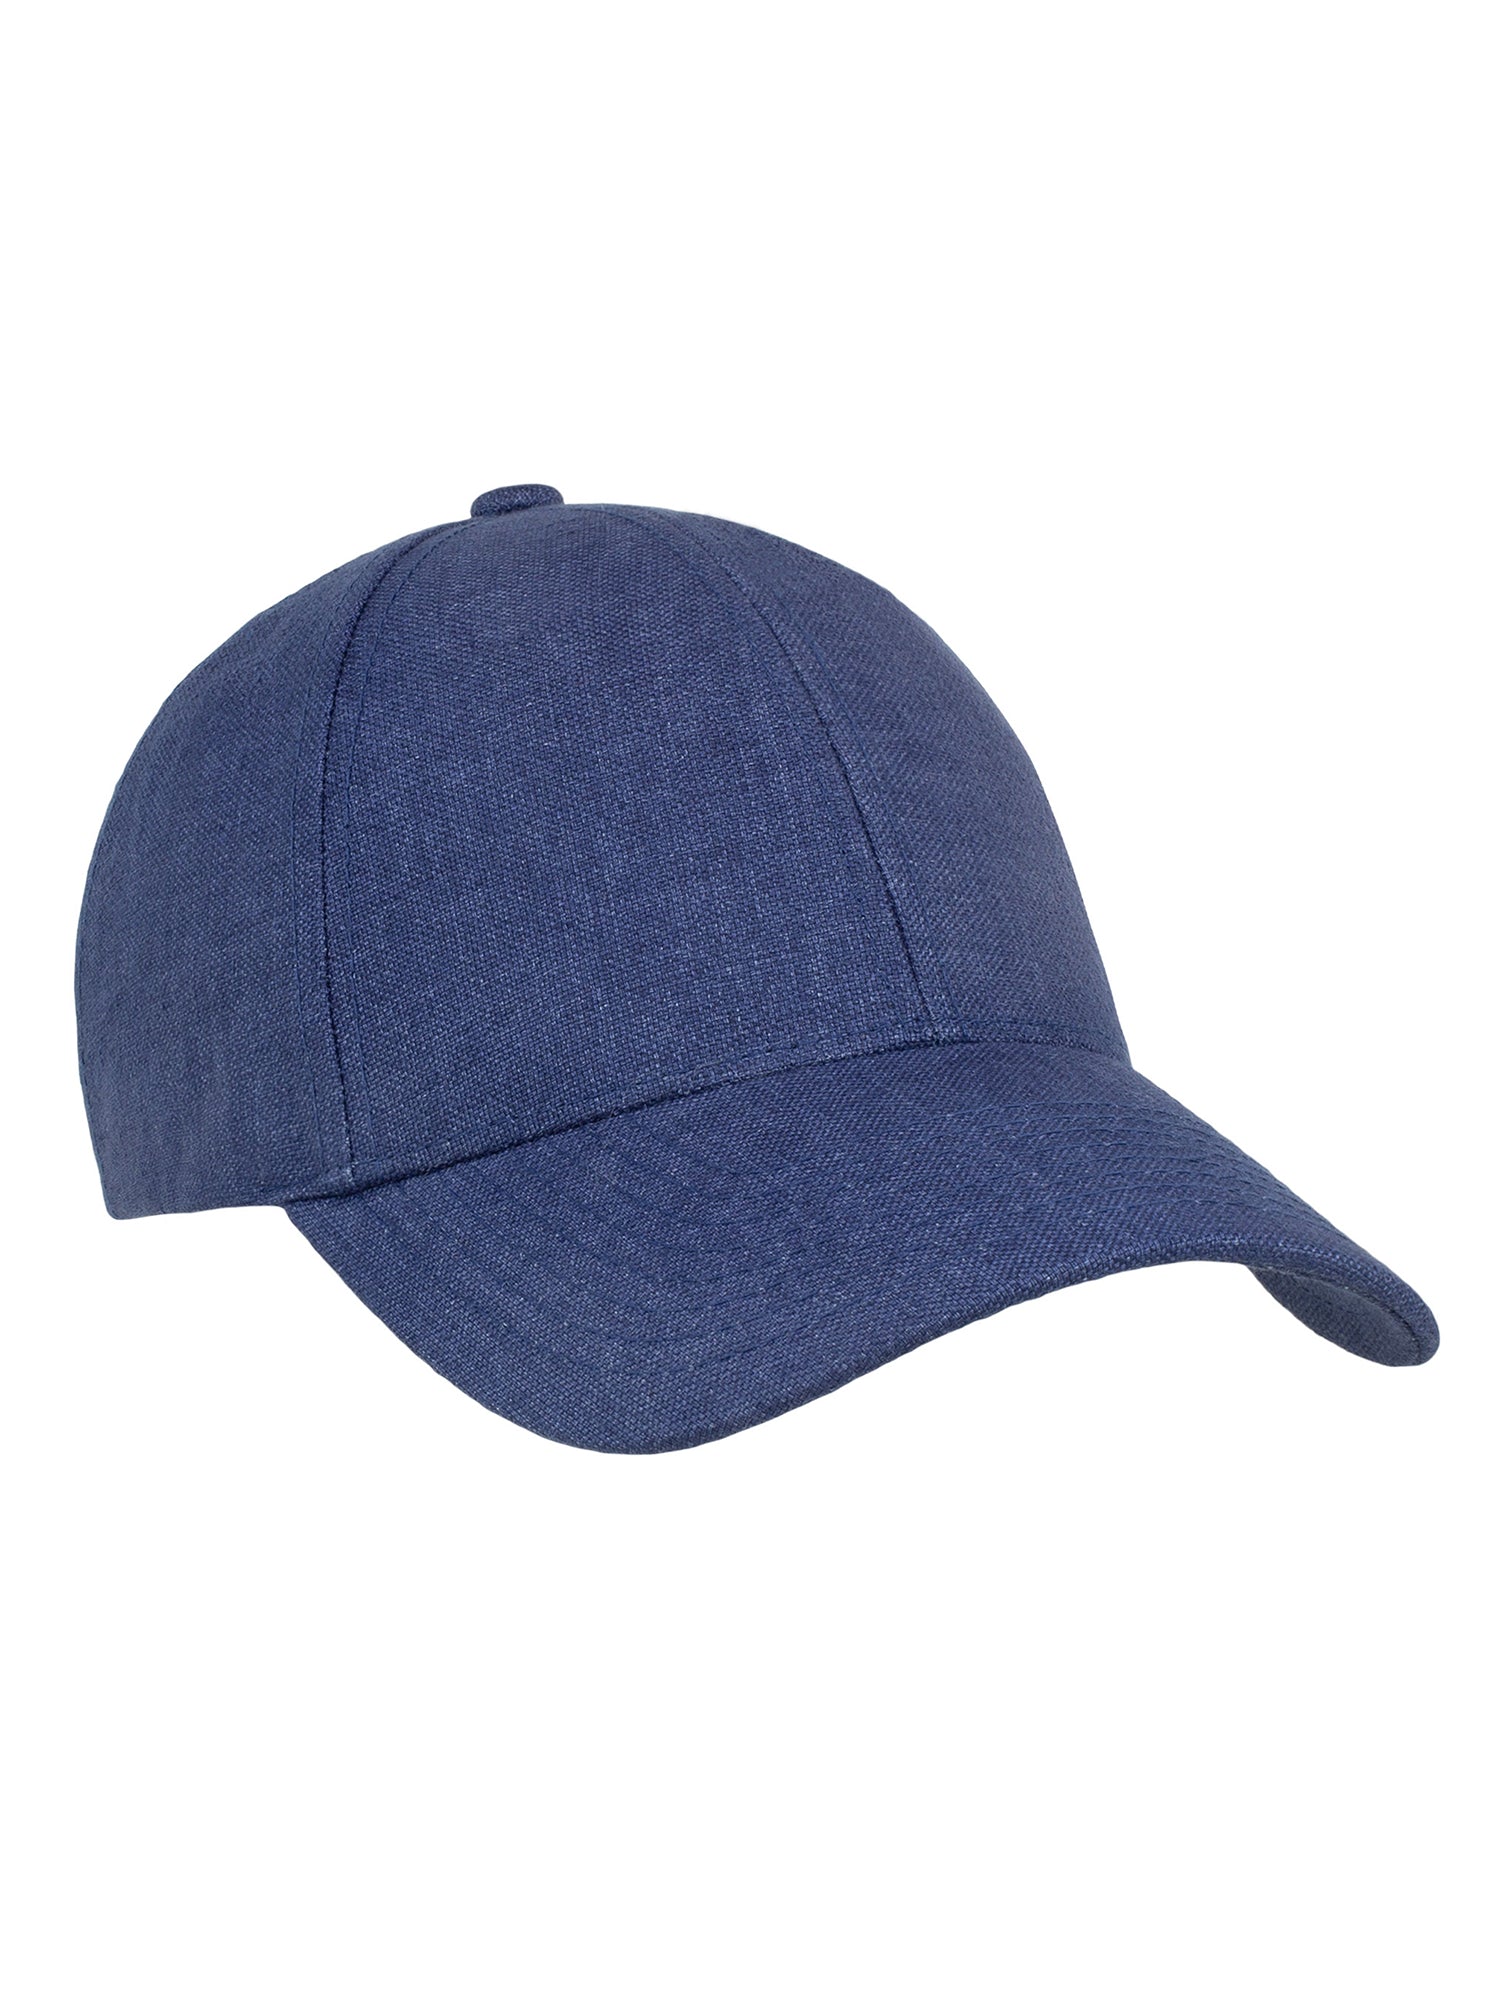 Oxford Blue Linen Cap